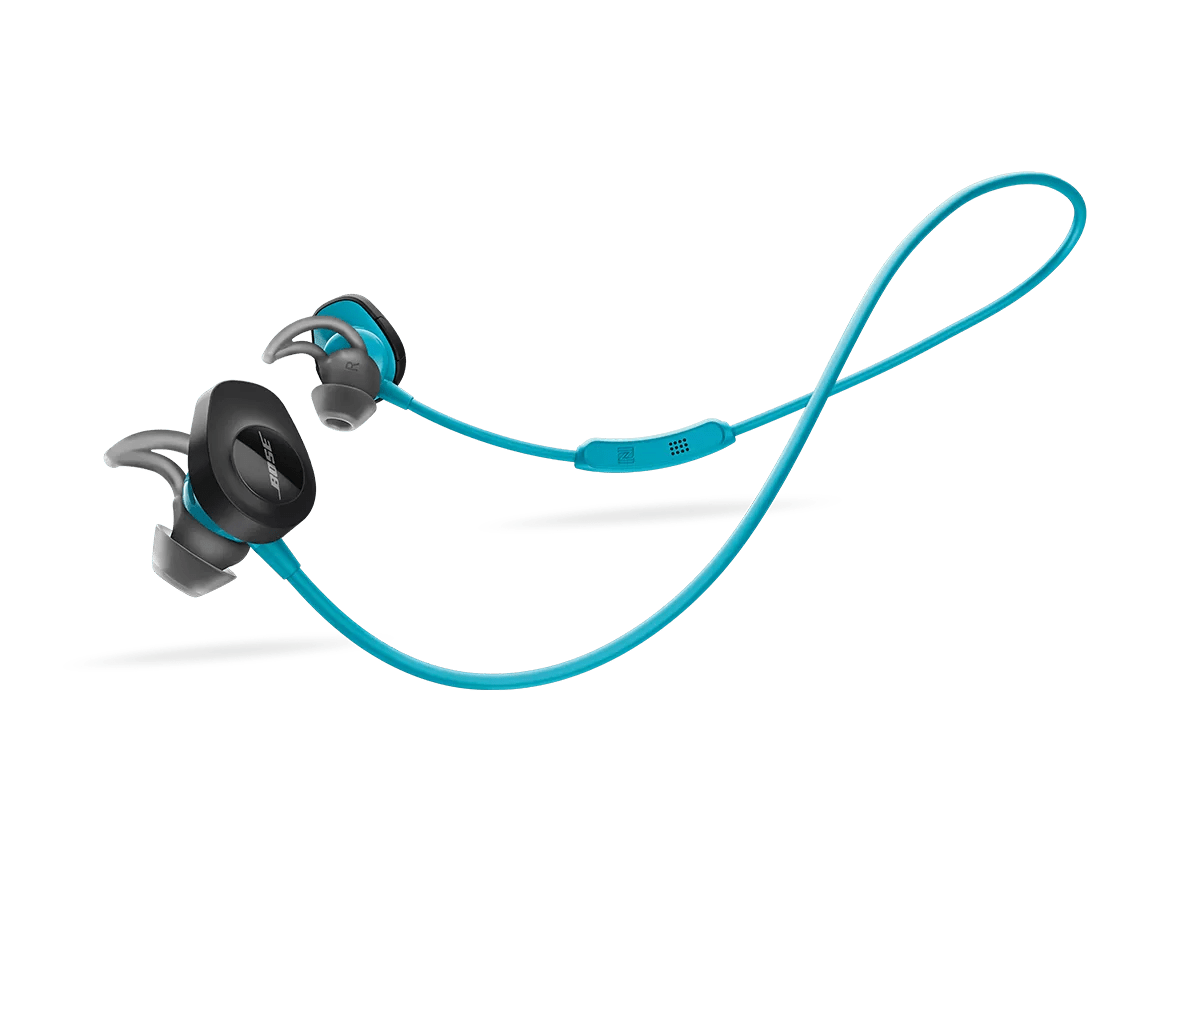 Bose SoundSport wireless headphones